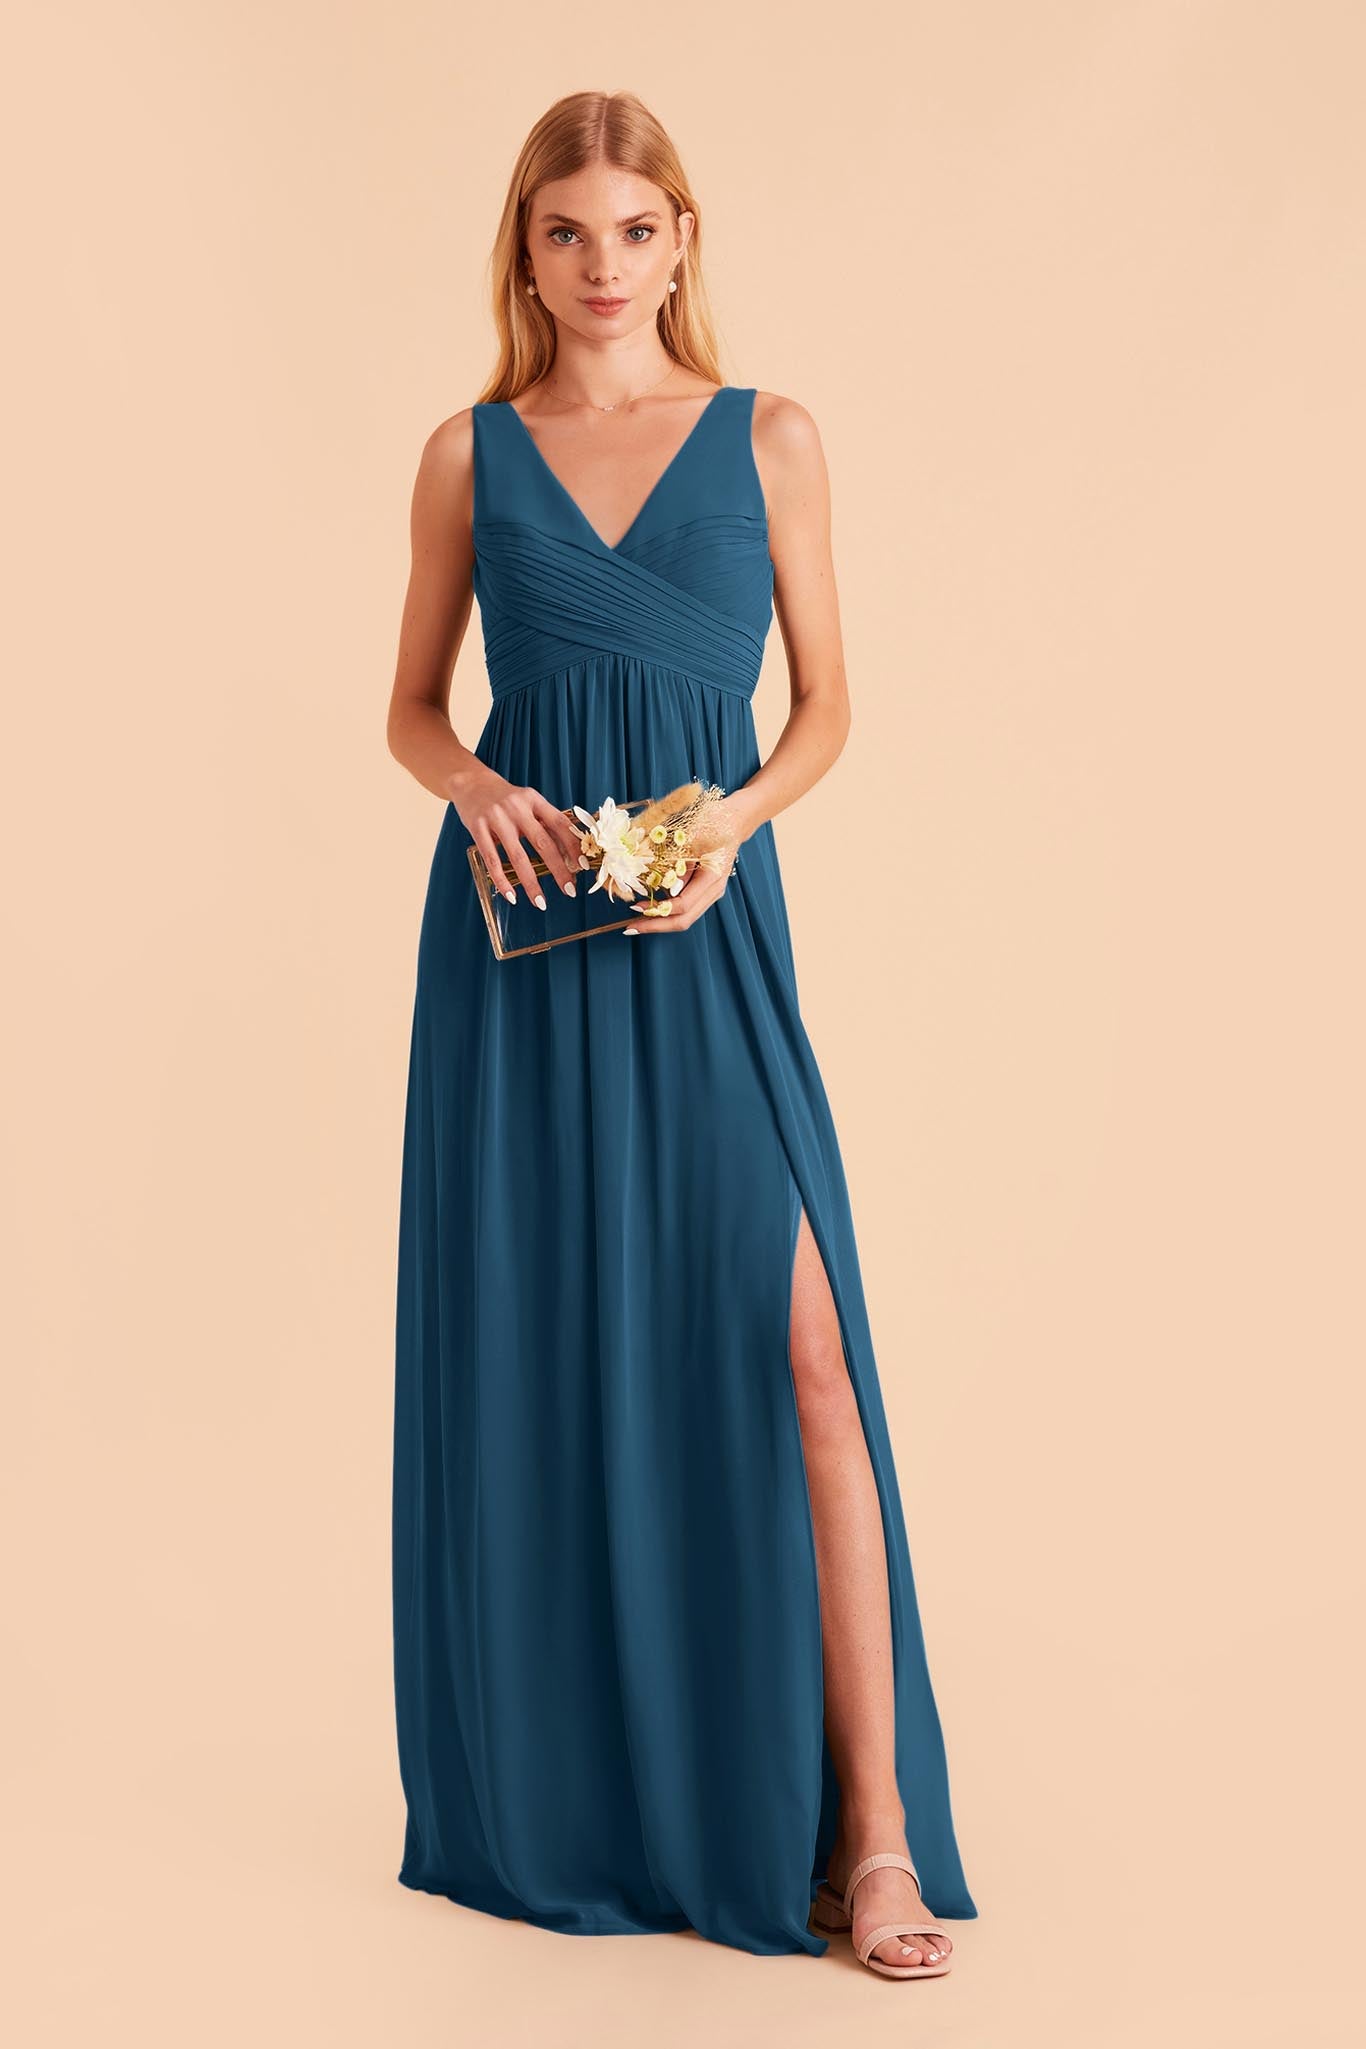 Ocean Blue Laurie Empire Dress by Birdy Grey